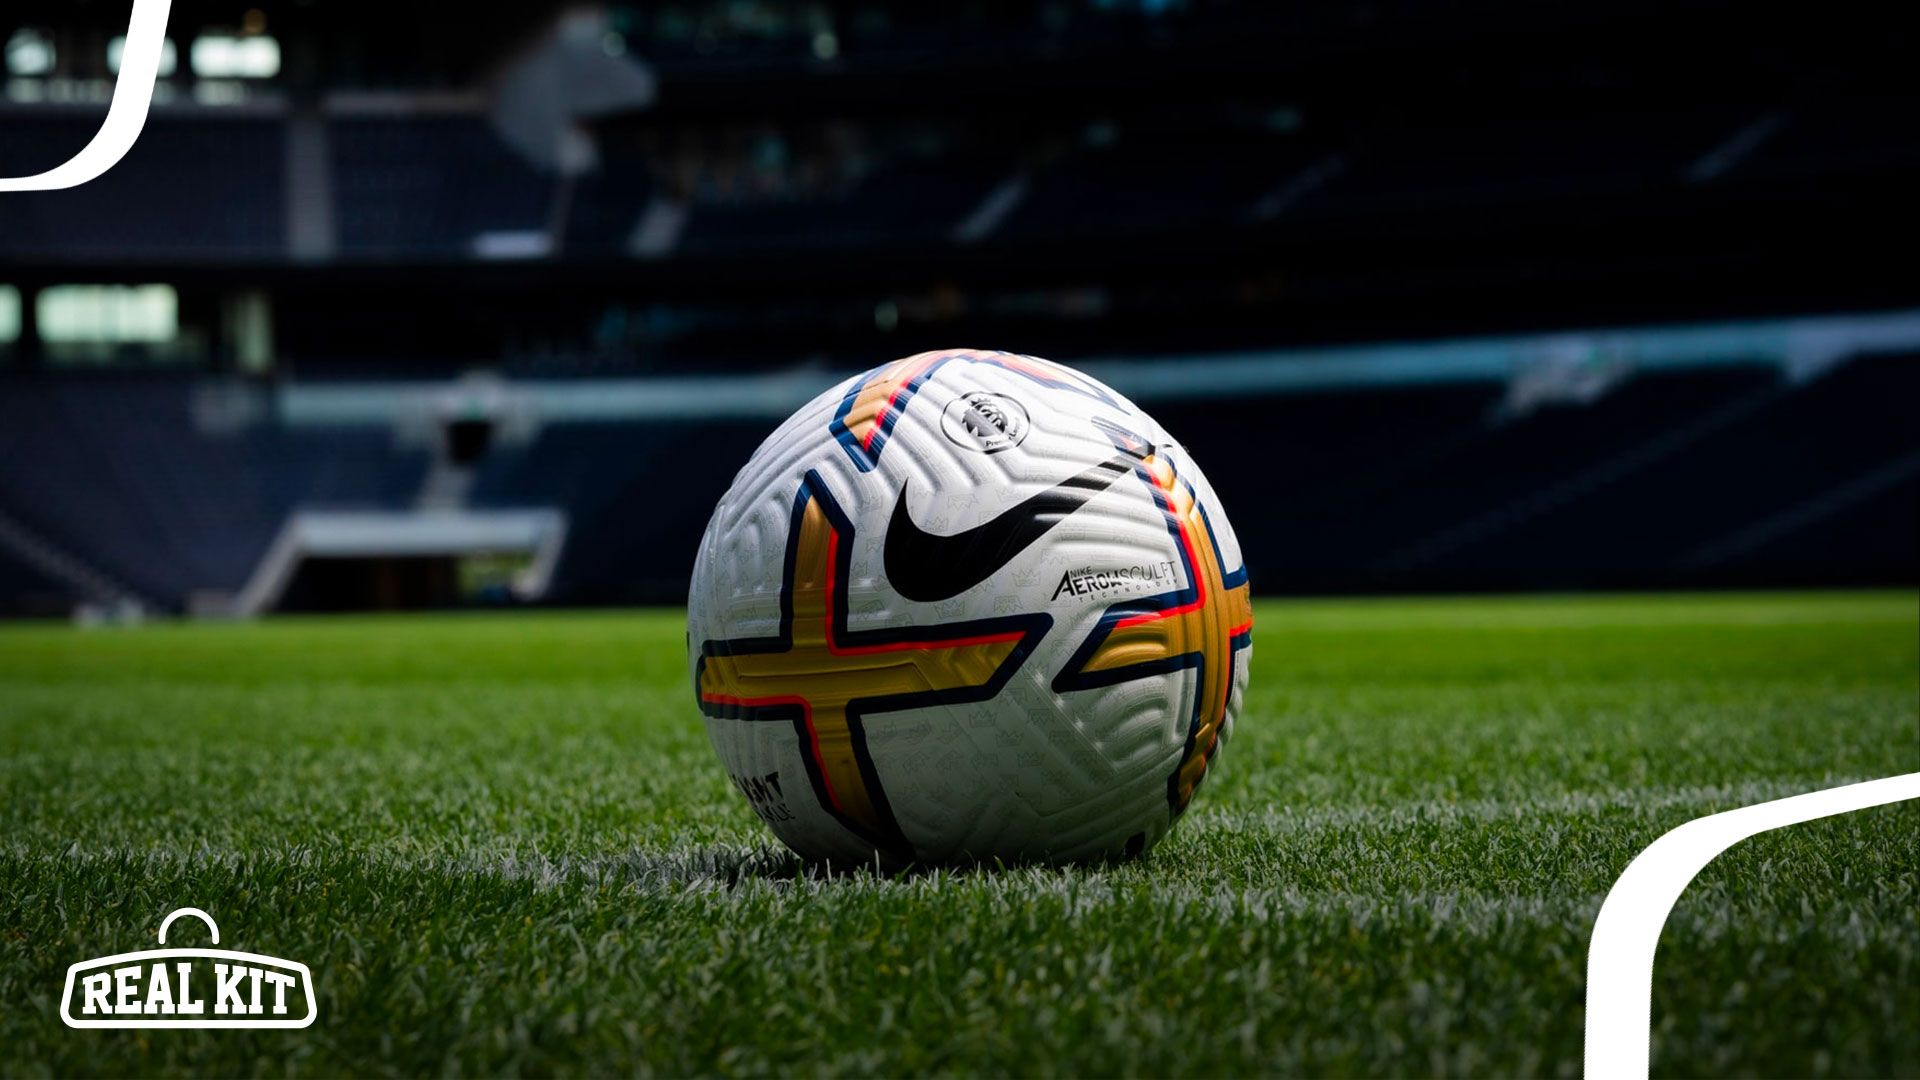 Top Quality Football Ball Size 5 training Soccer Match Ball World Cup Design 